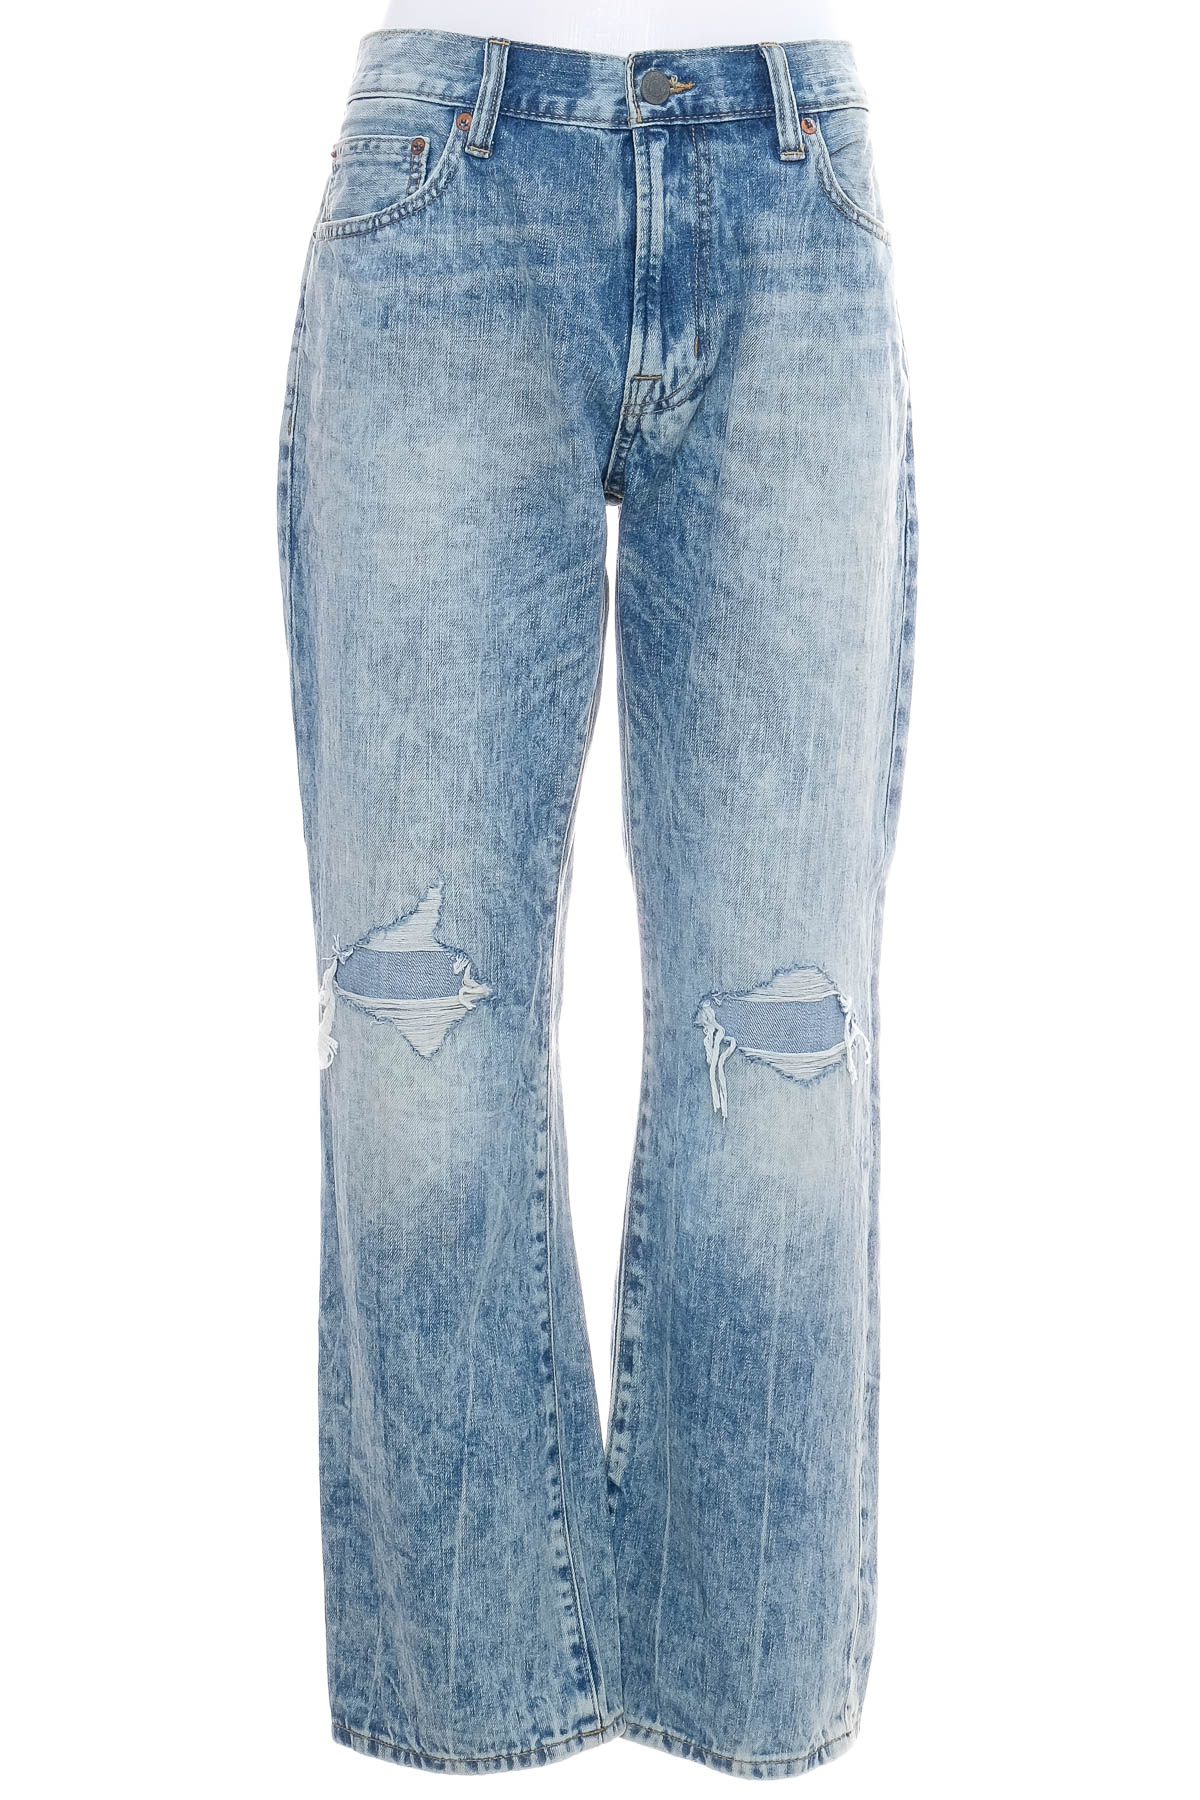 Men's jeans - American Eagle - 0